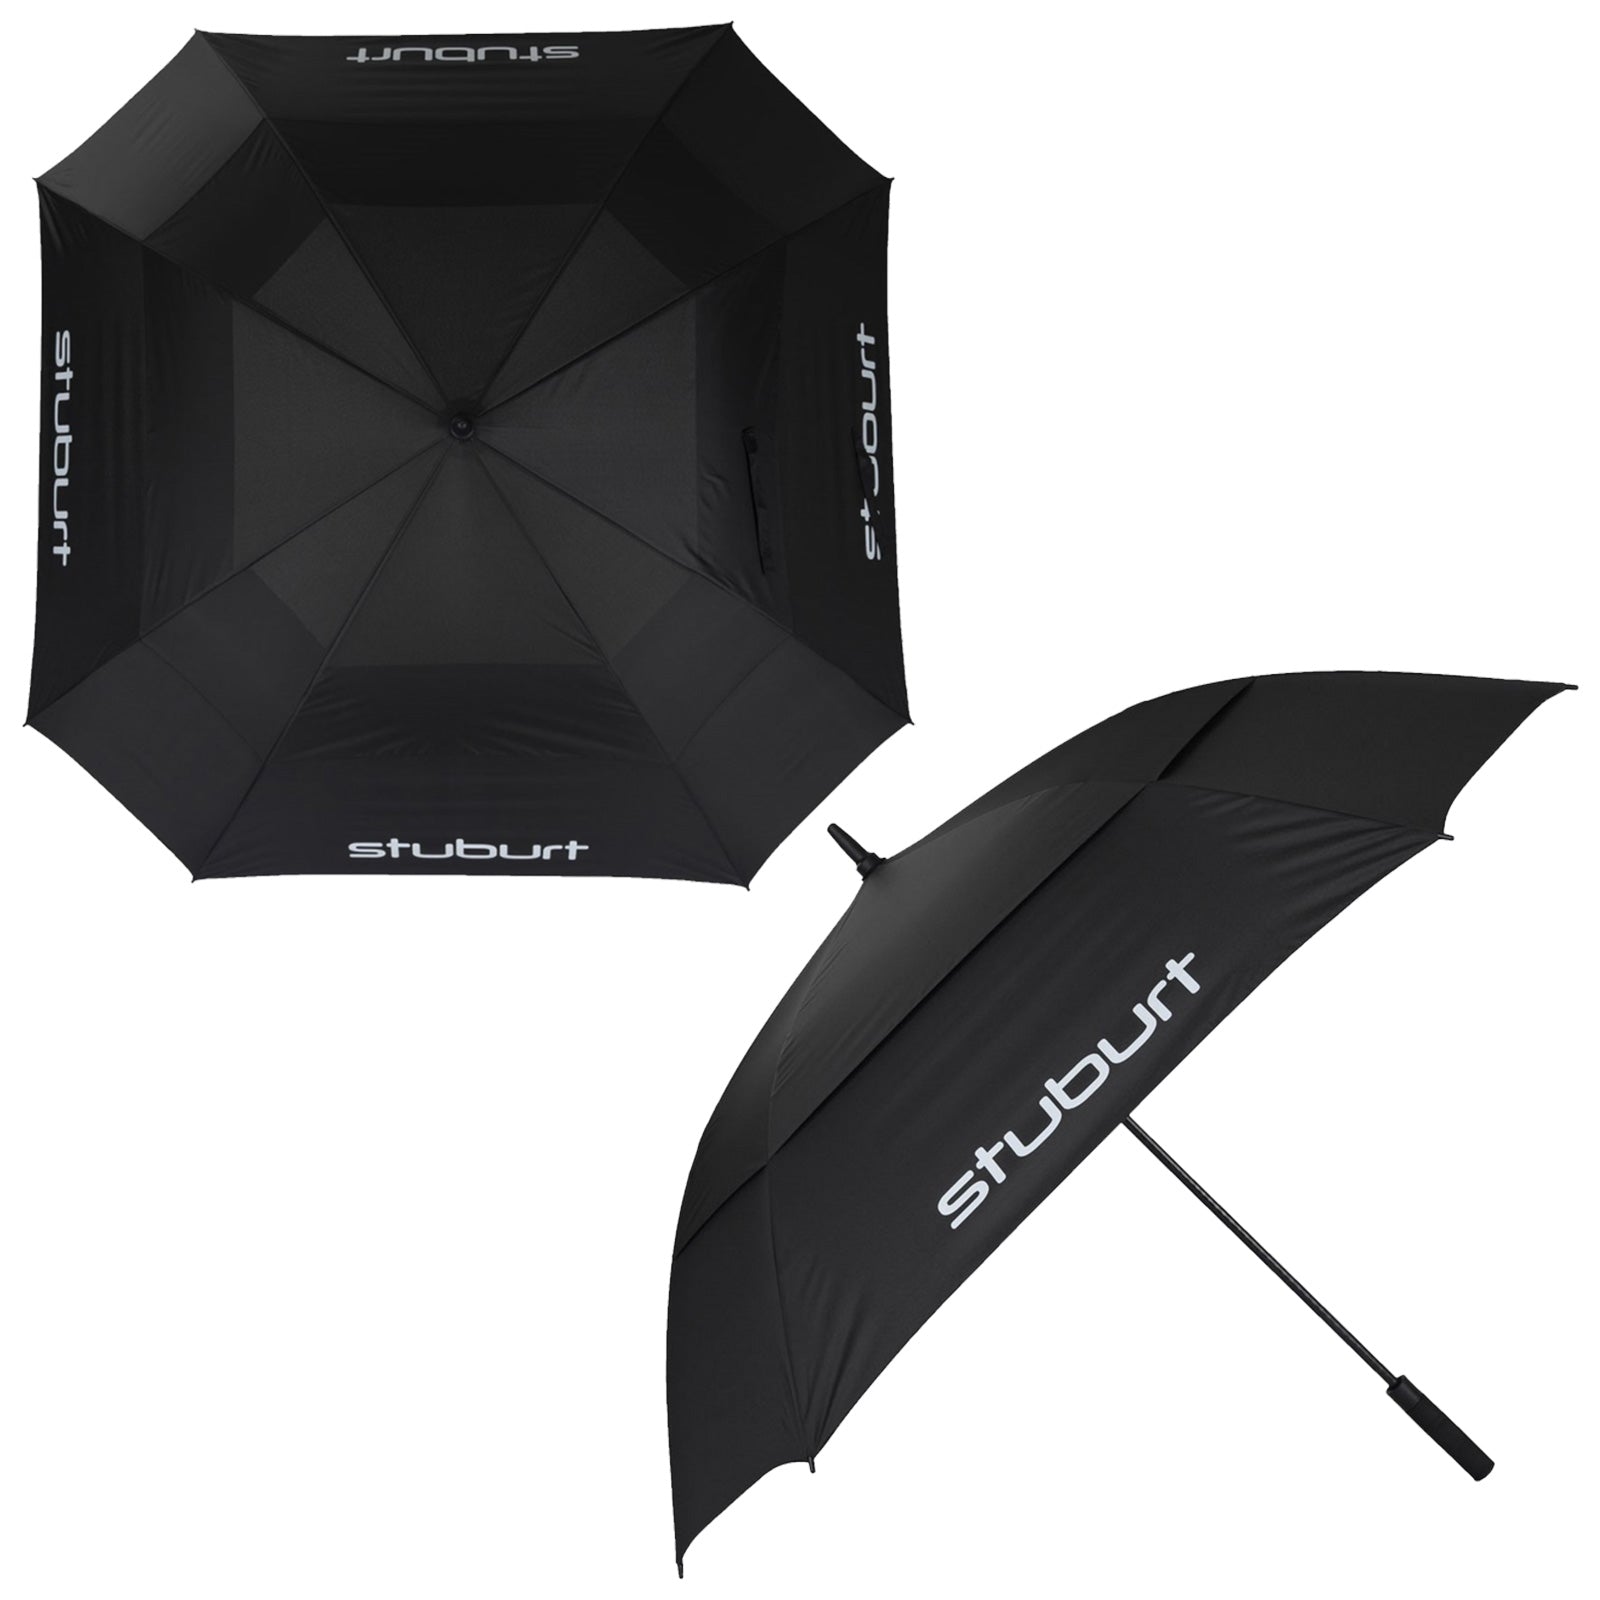 Stuburt 66" Double Canopy Umbrella